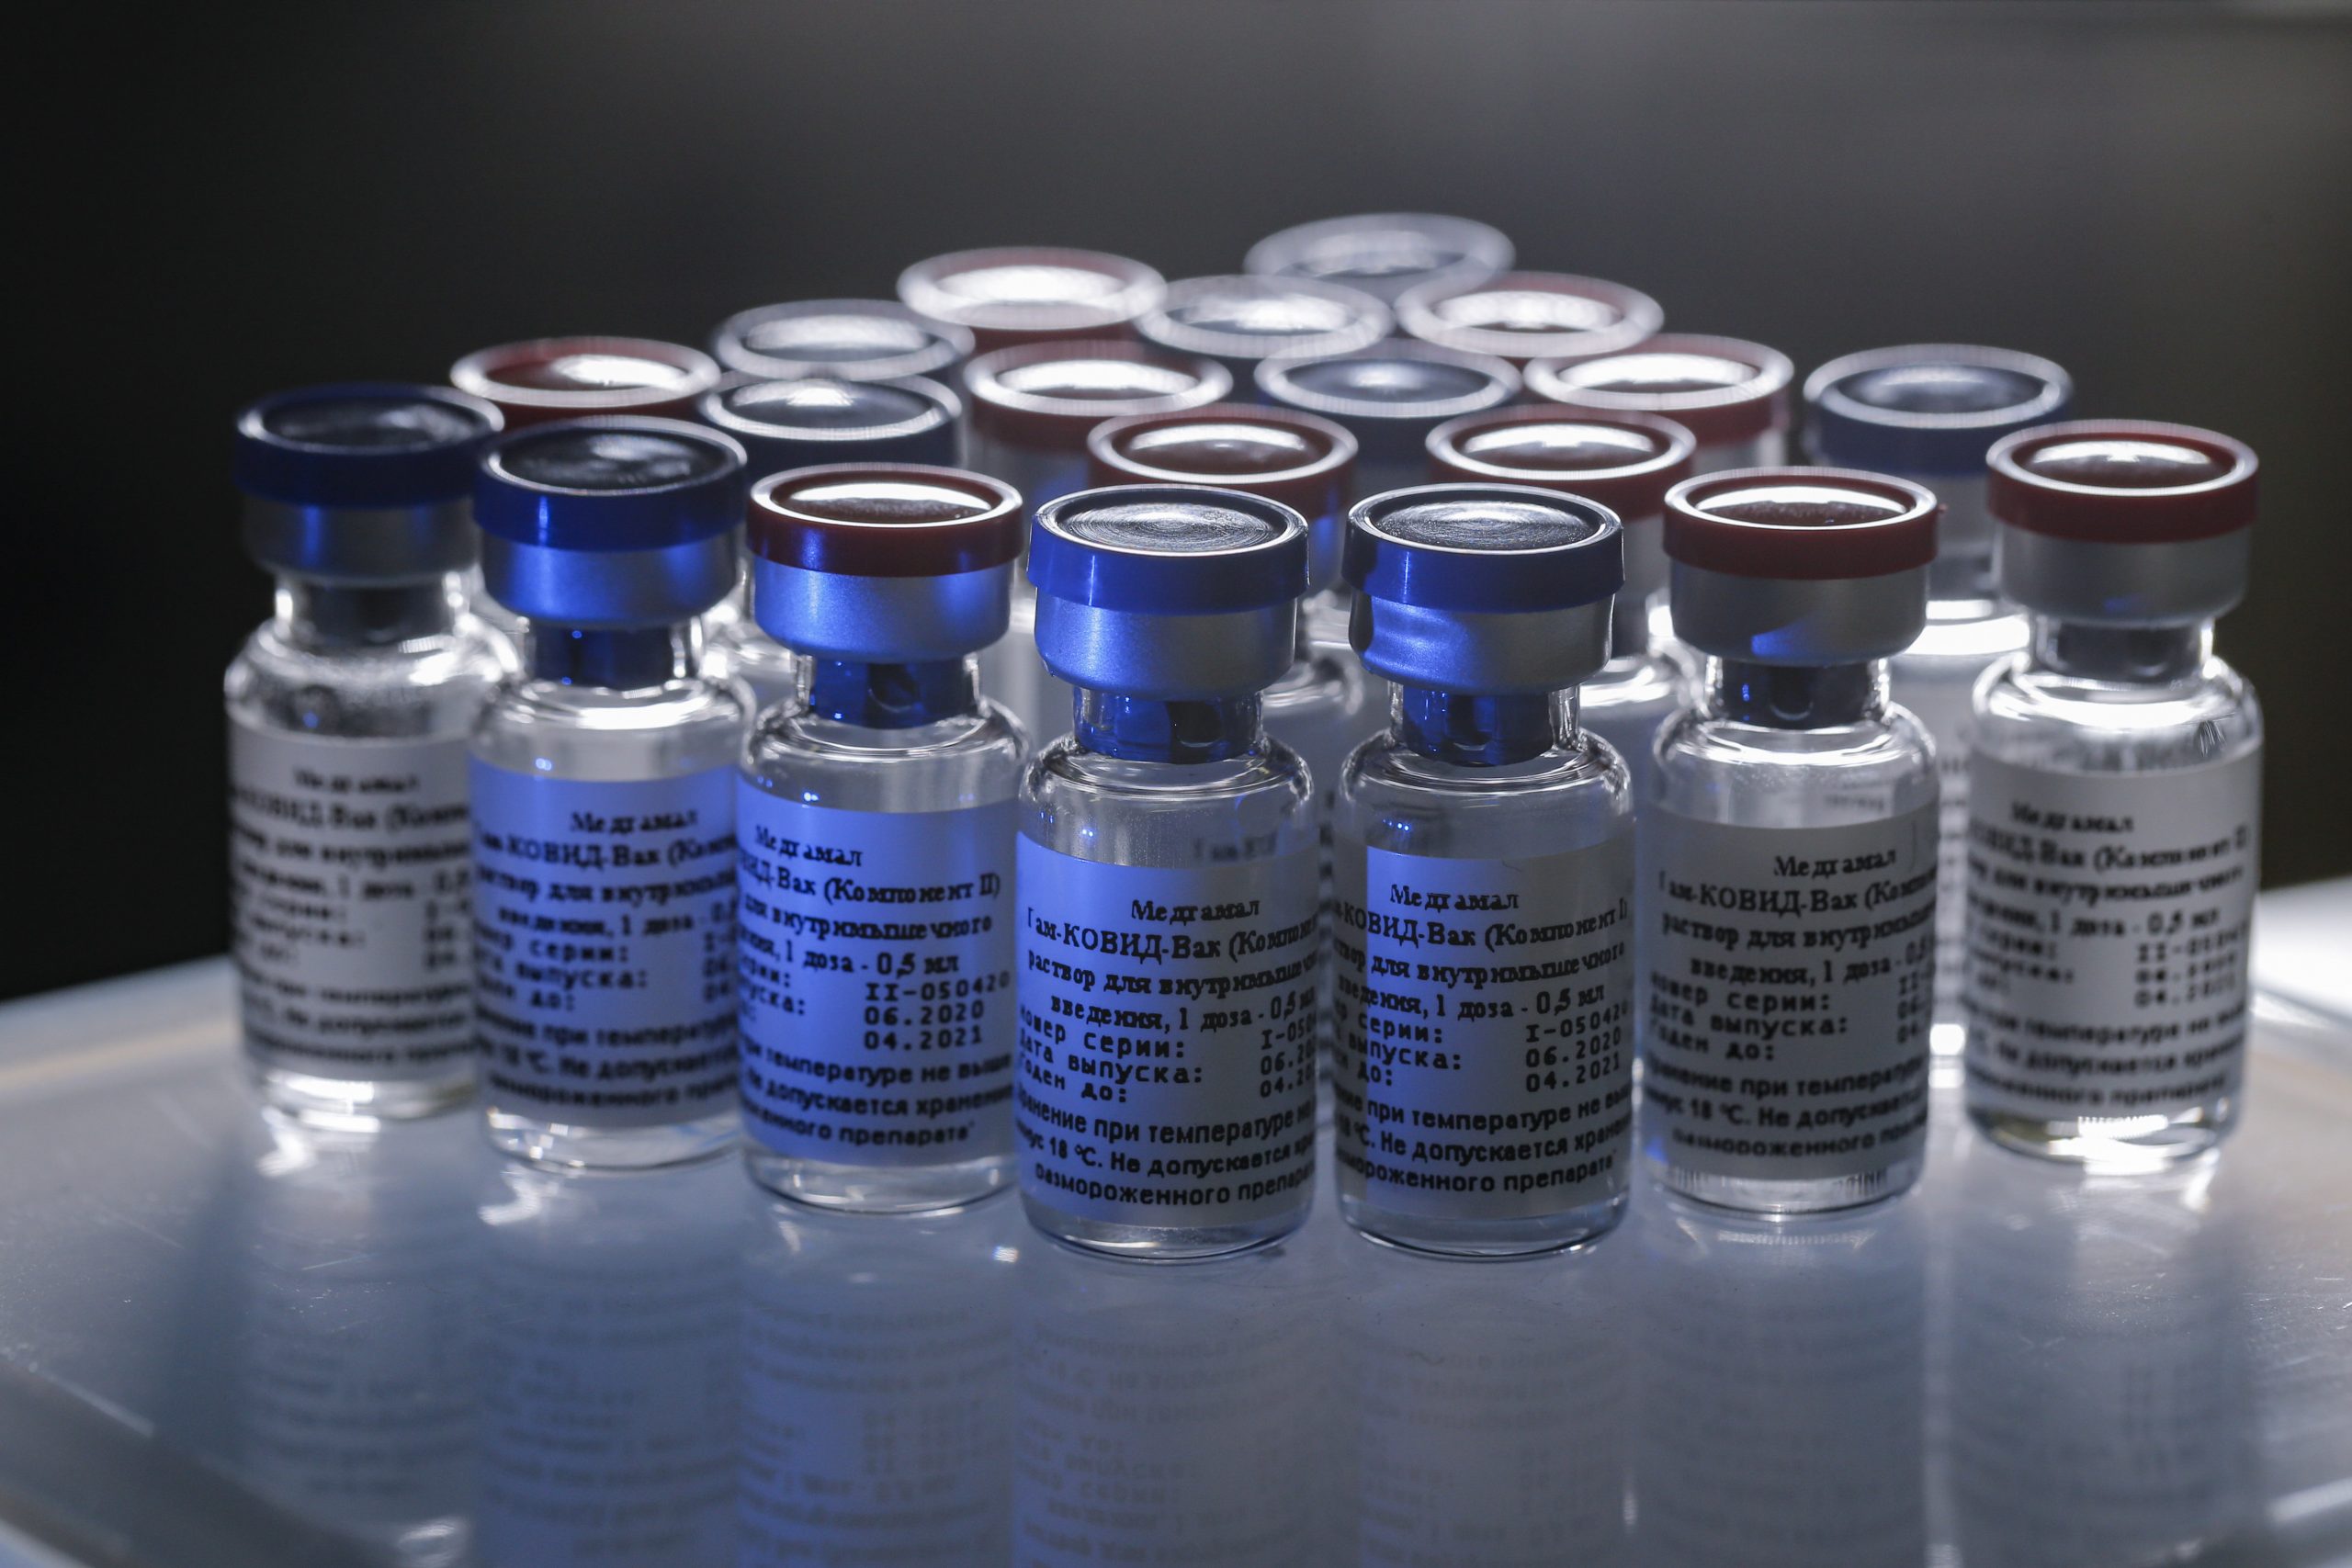 Coronavirus: First Russian Vaccine Shipment Arrives